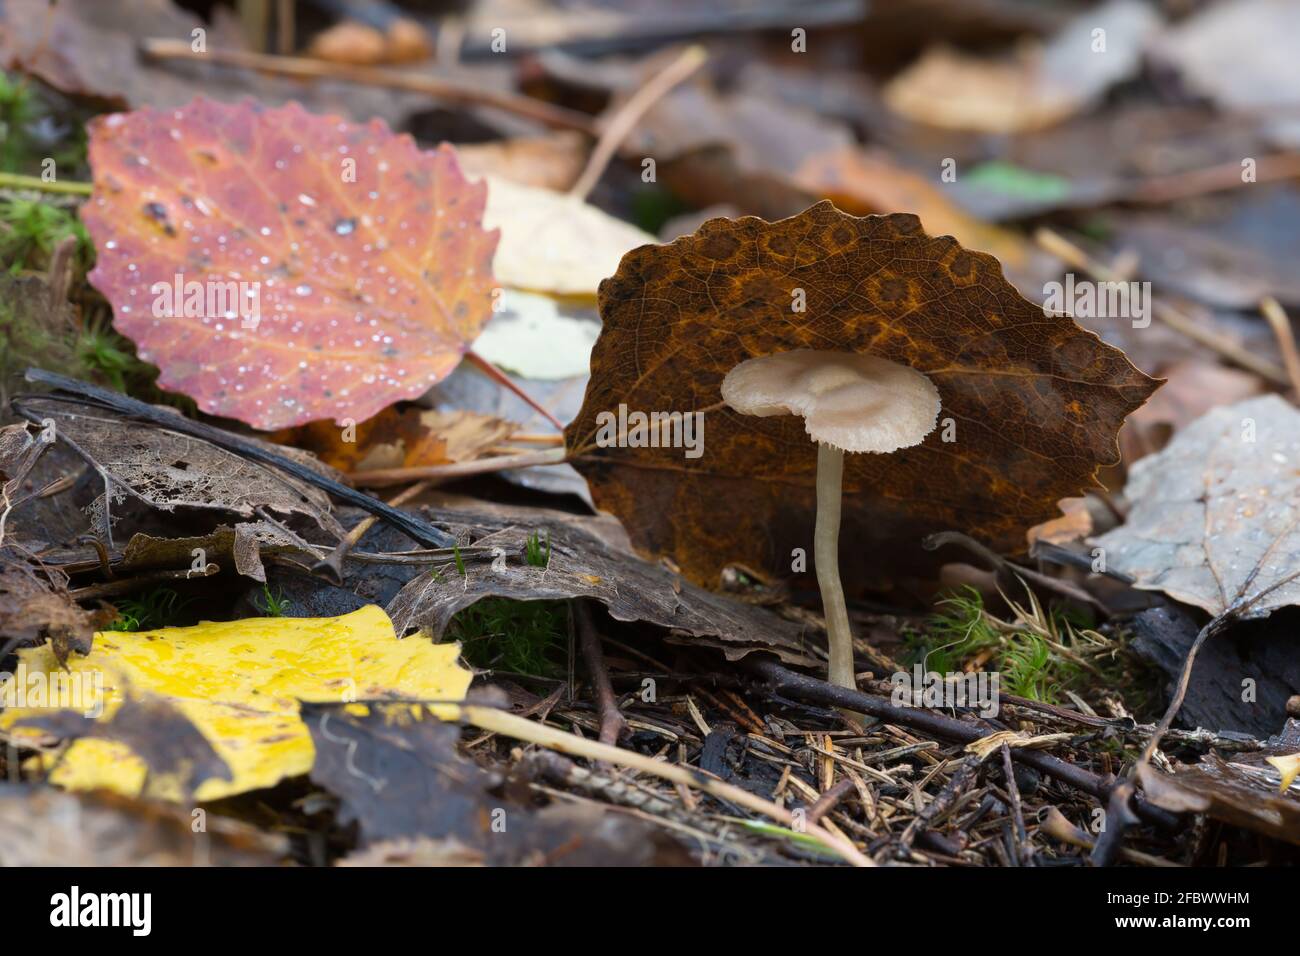 Mycena mushroom growing among aspen leafs in autumn Stock Photo